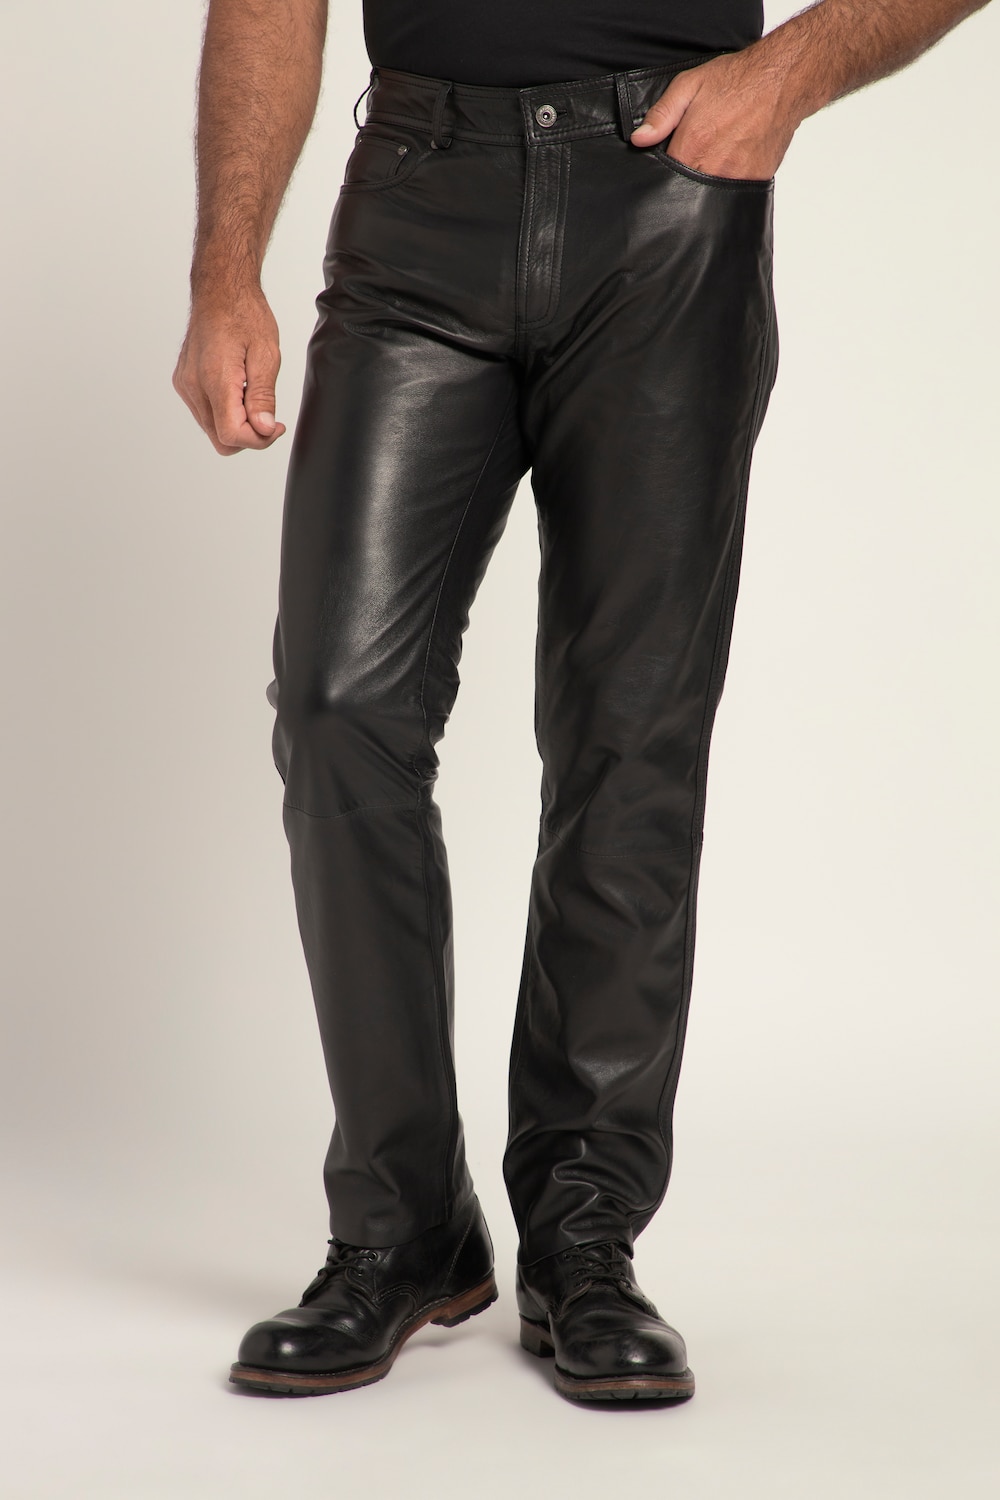 Große Größen Lederhose, Herren, schwarz, Größe: 64, Leder/Polyester/Baumwolle, JP1880 von JP1880